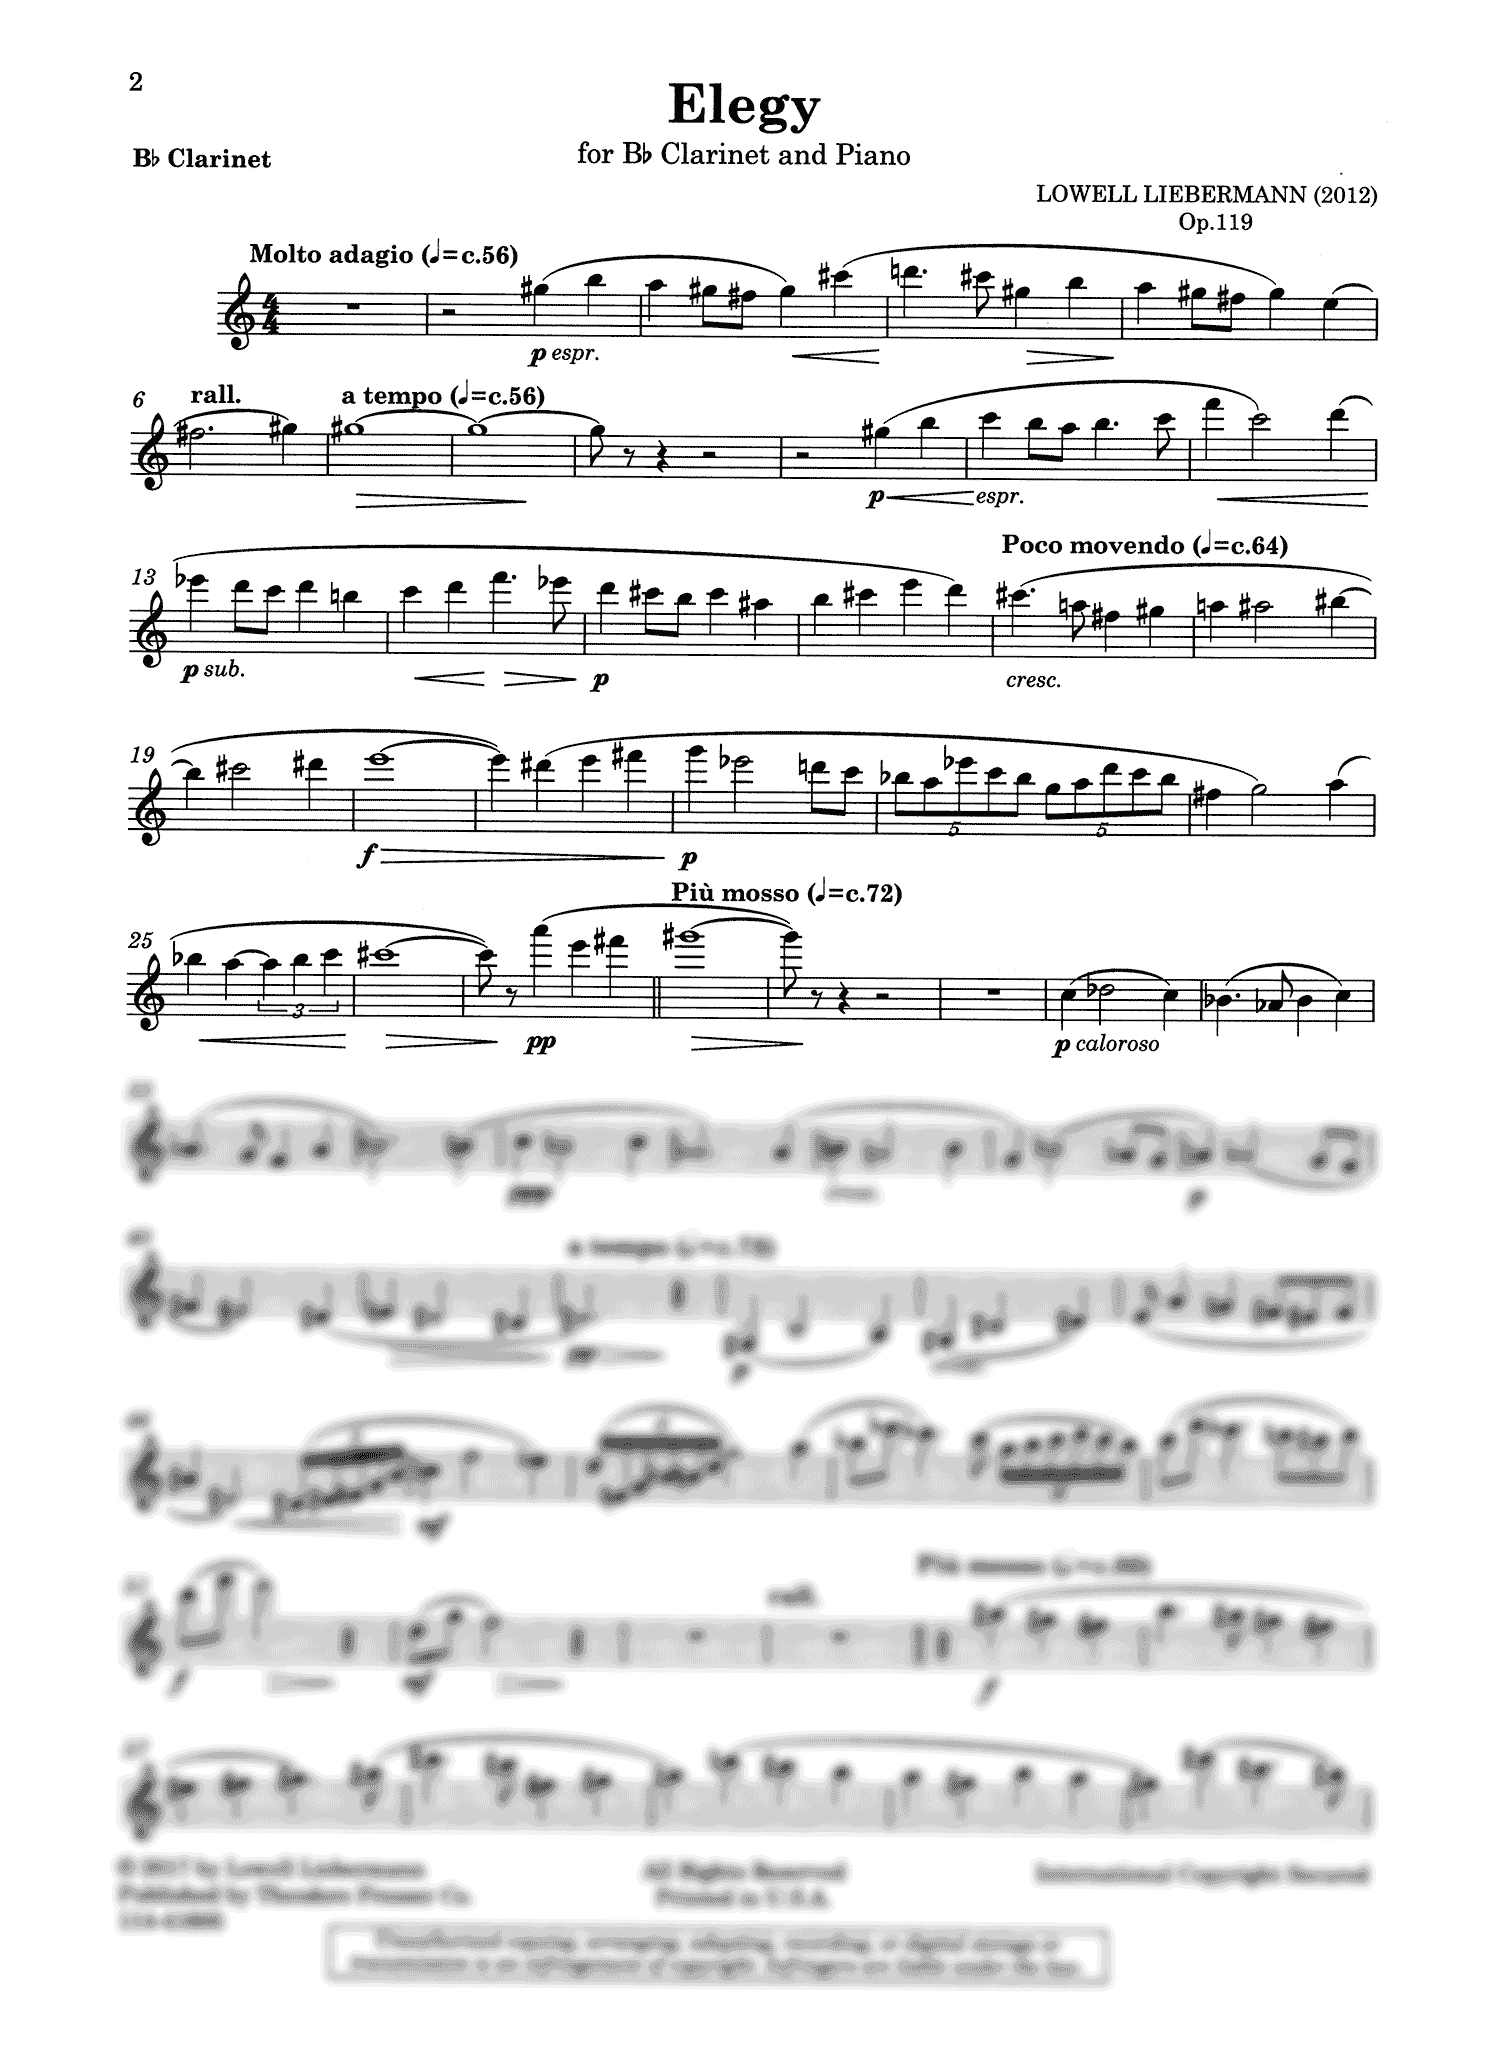 Elegy, Op. 119 Clarinet part